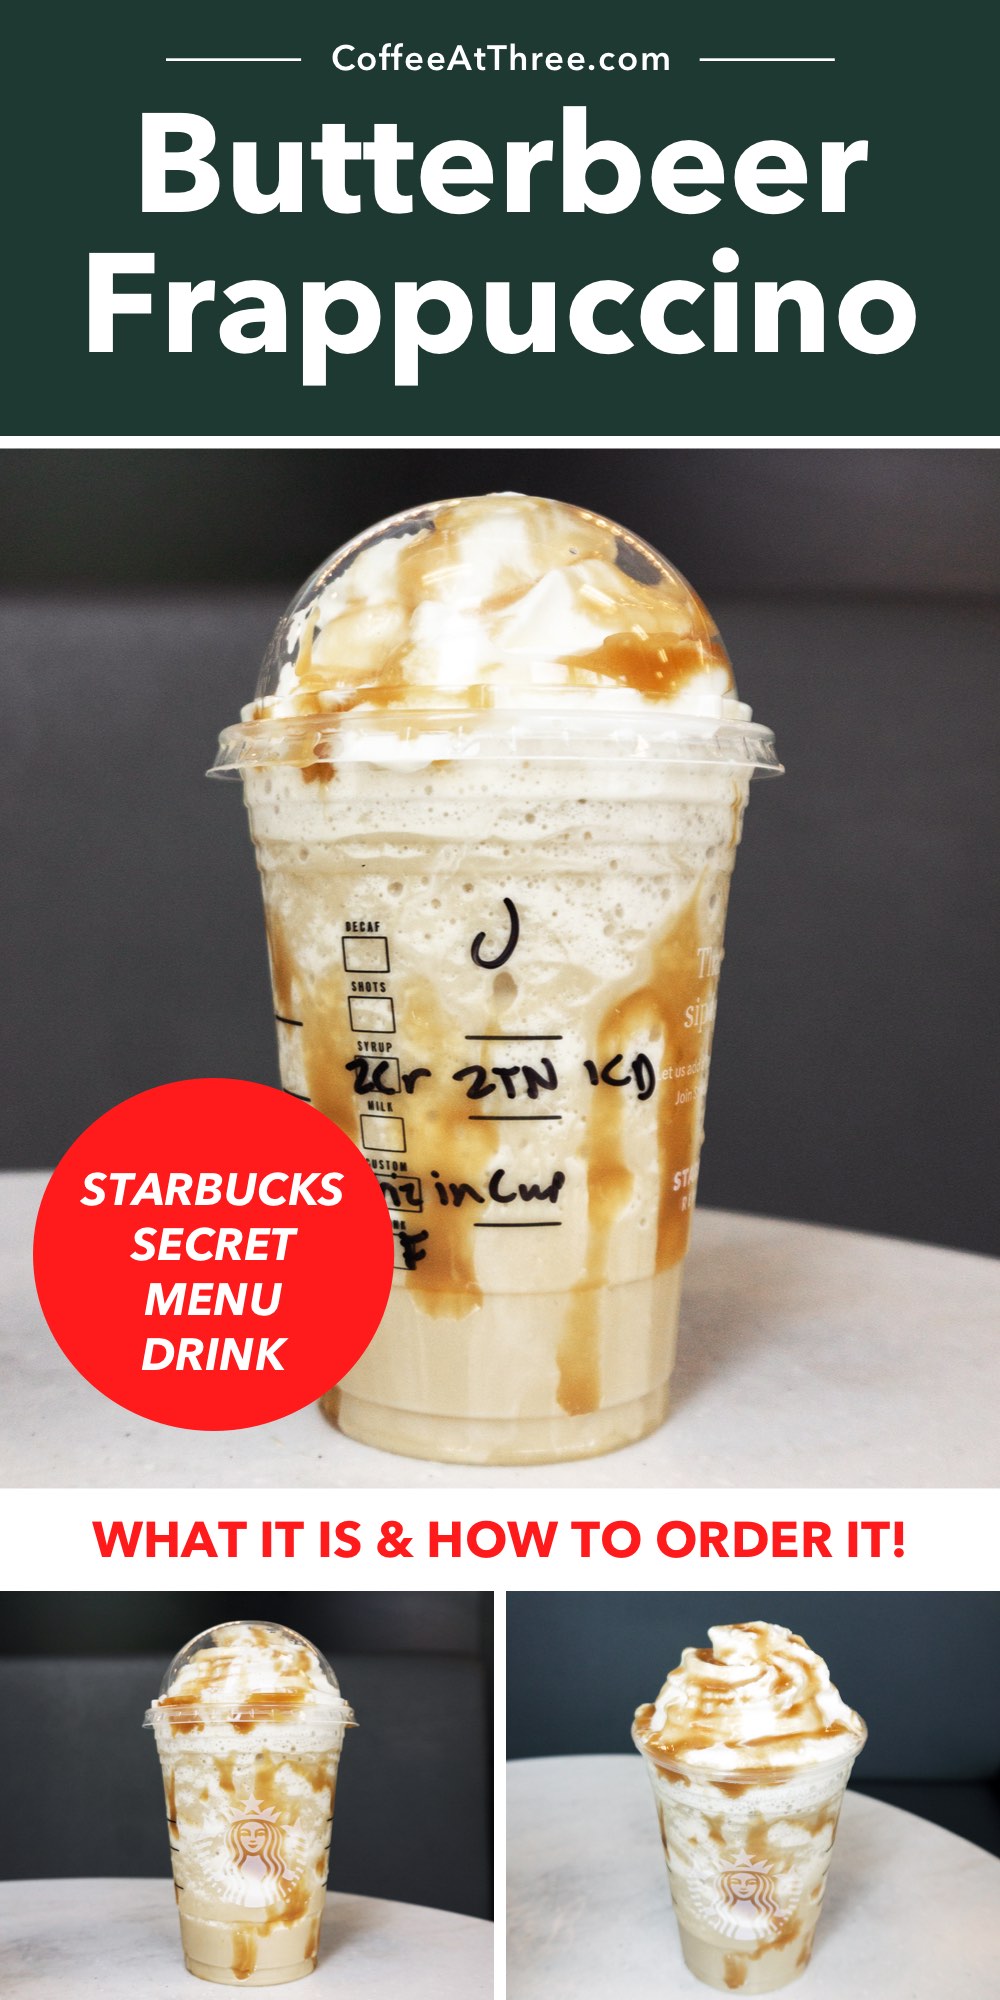 Boterbier Frappuccino (Starbucks Secret Menu)